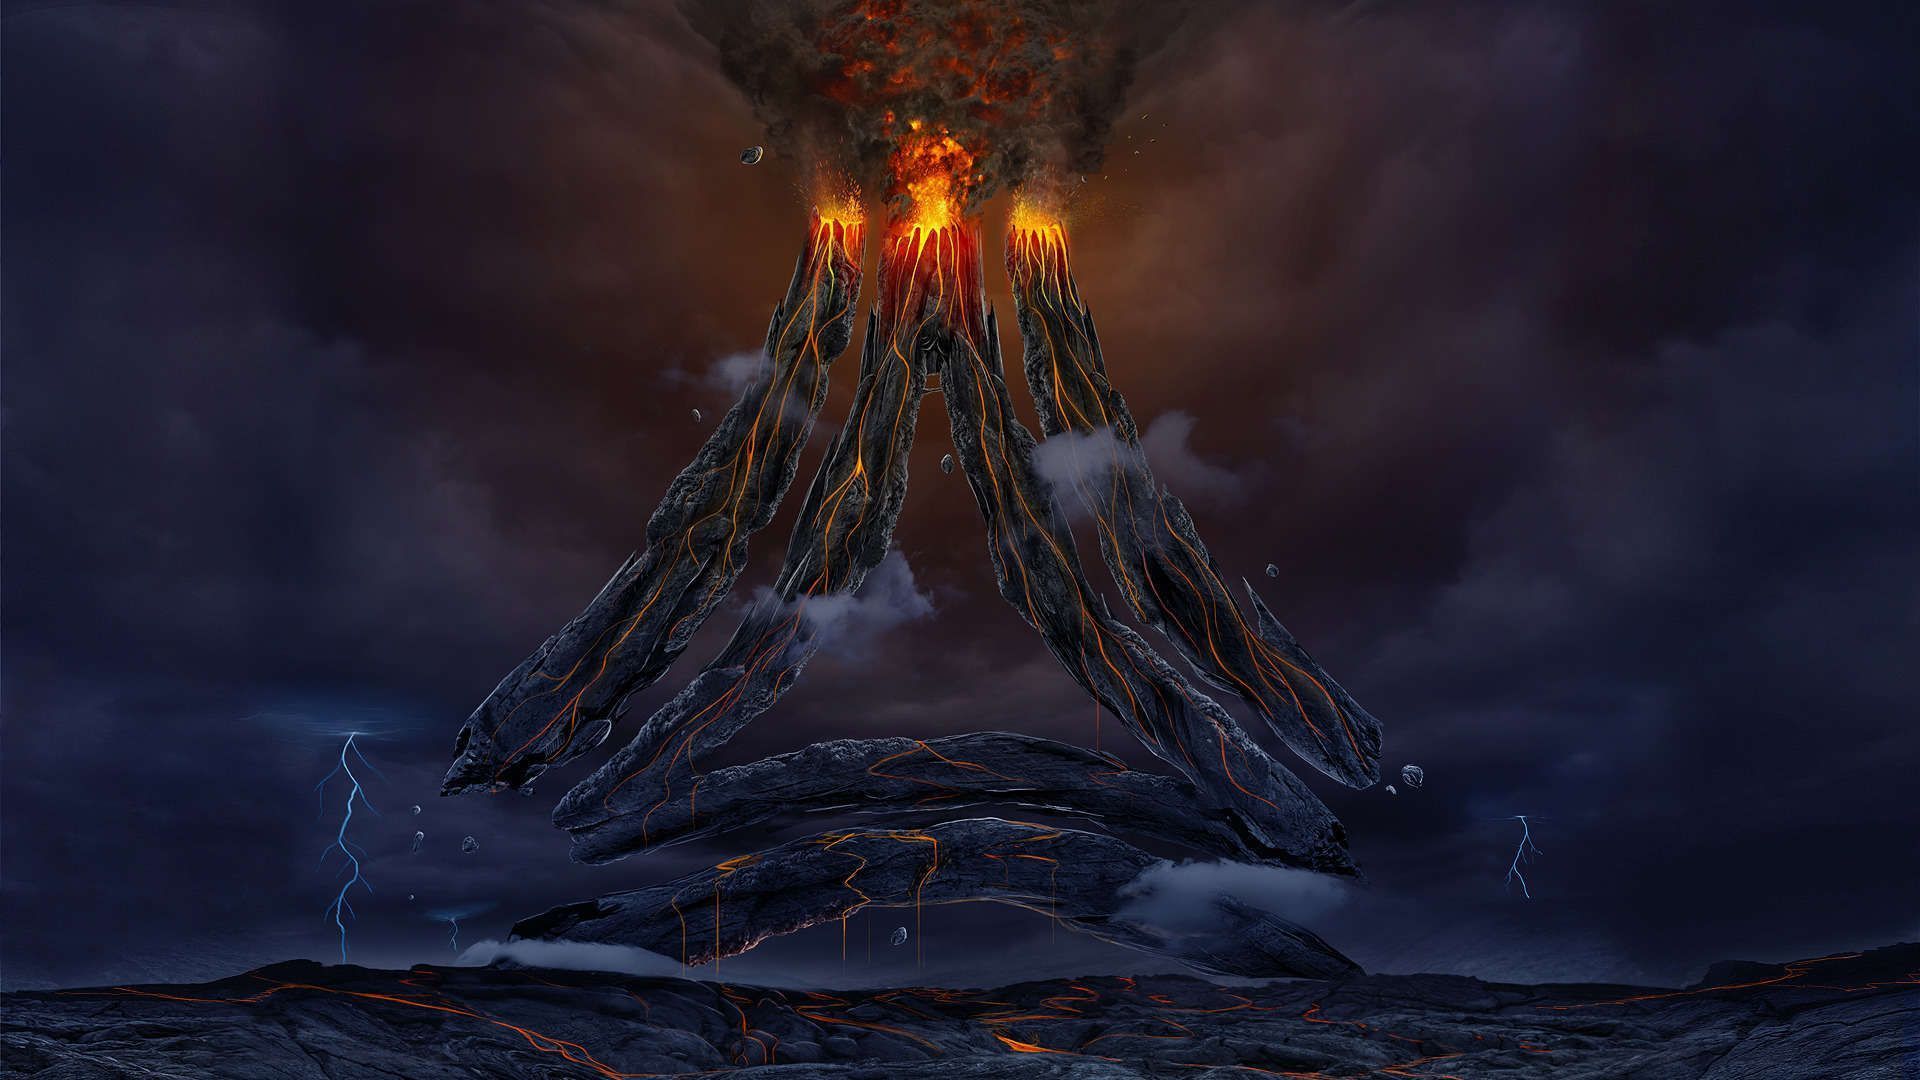 Volcano-beautiful-wide-desktop-new-wallpapers-in-high-resolution-free-Download.jpg